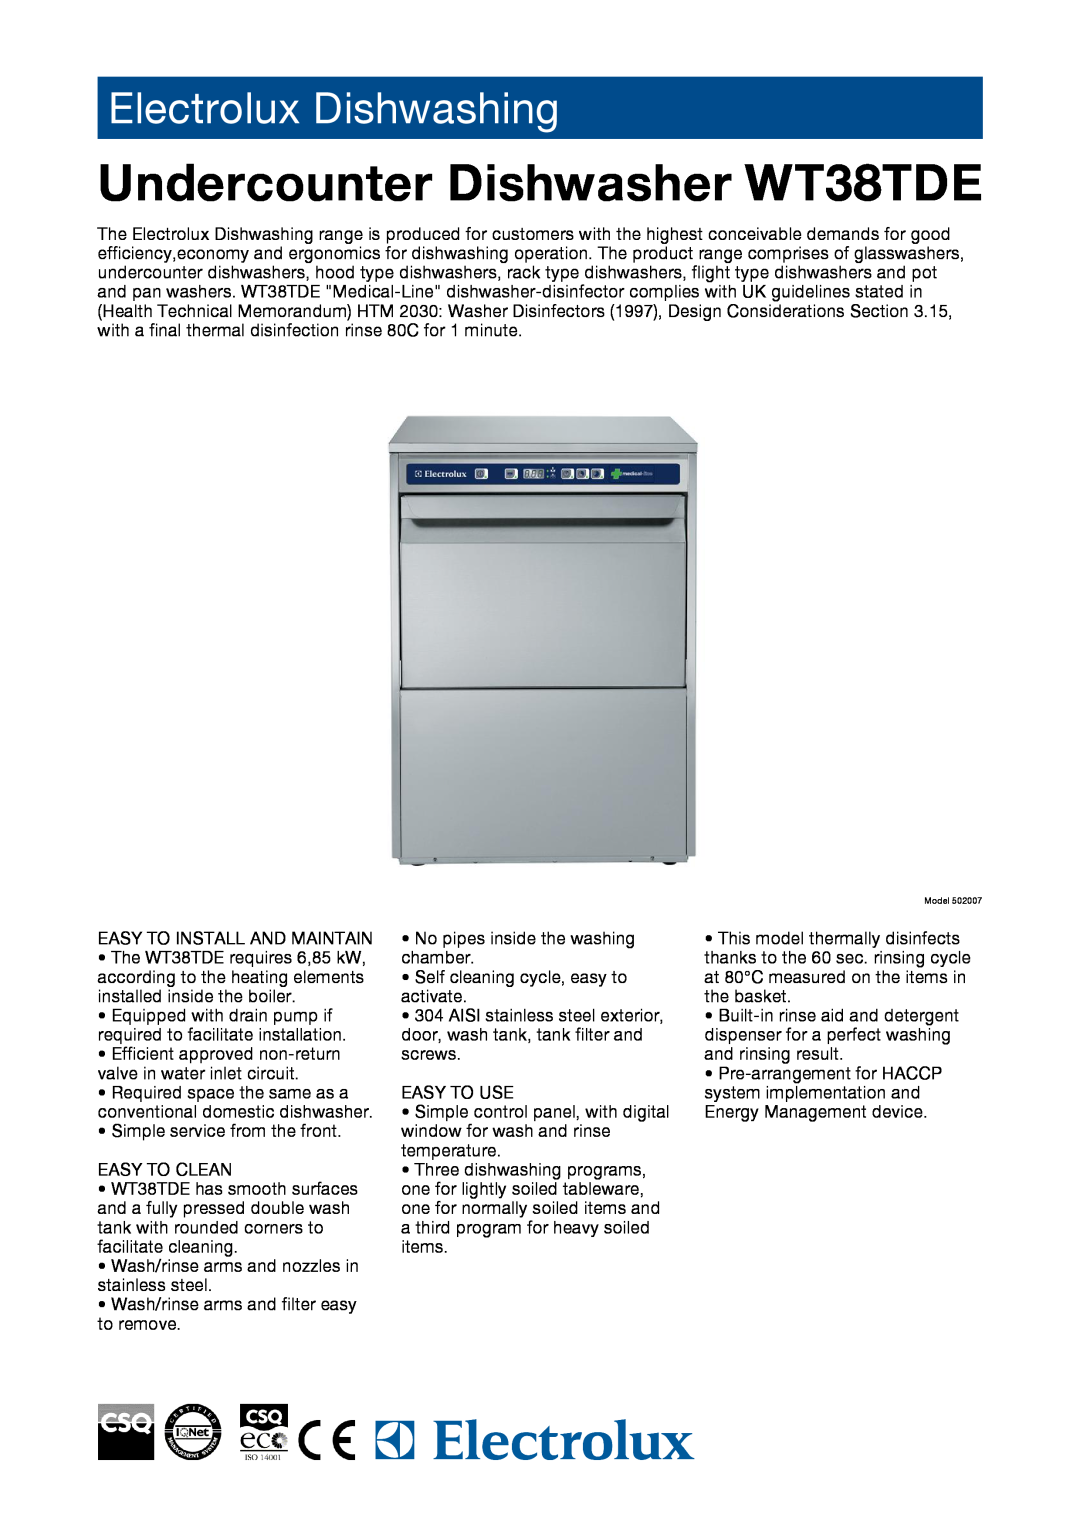 Electrolux manual Undercounter Dishwasher WT38TDE, Electrolux Dishwashing 